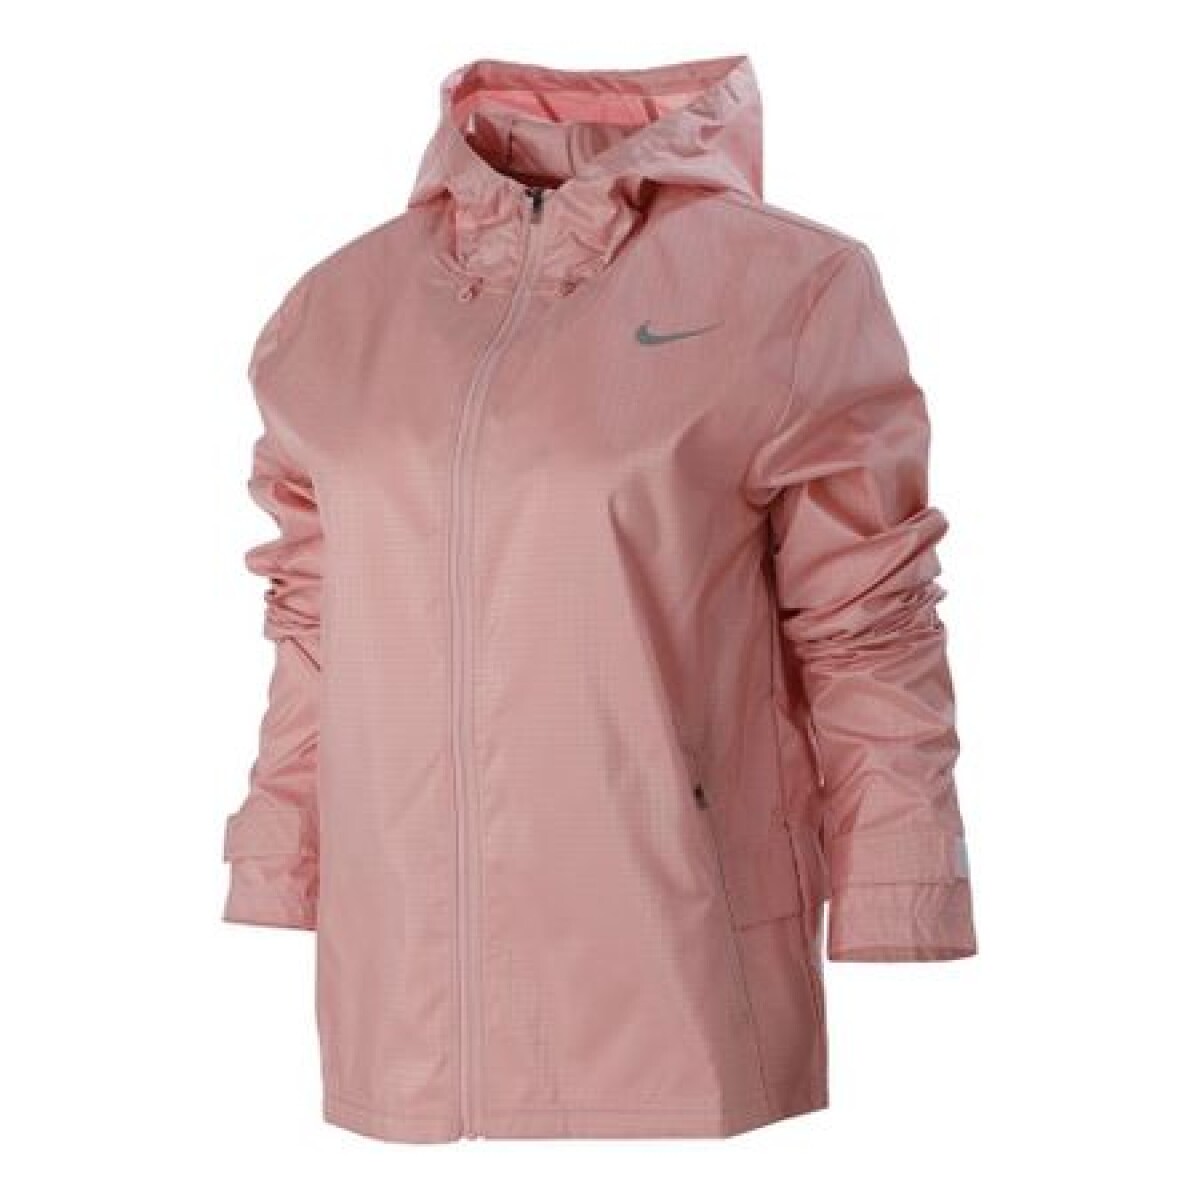 Campera Nike Running Dama Essential Jacket Pink Glaze/(REFLECTIVE SILV) - Color Único 